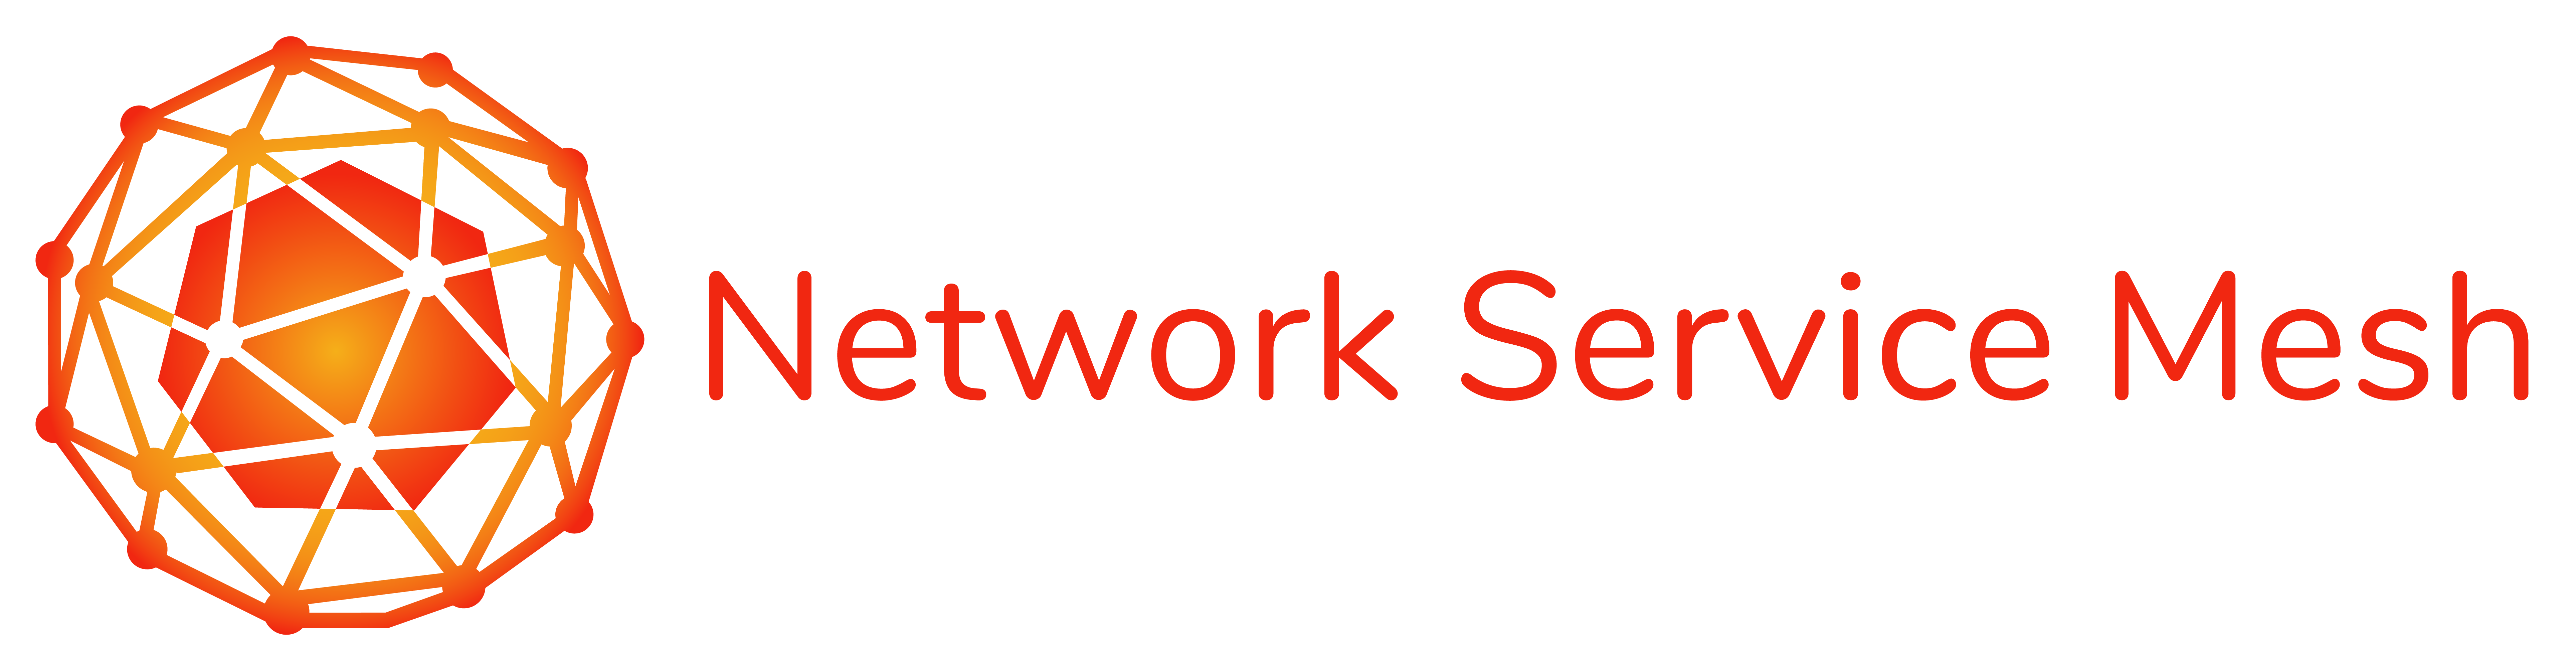 Network Service Mesh navbar logo